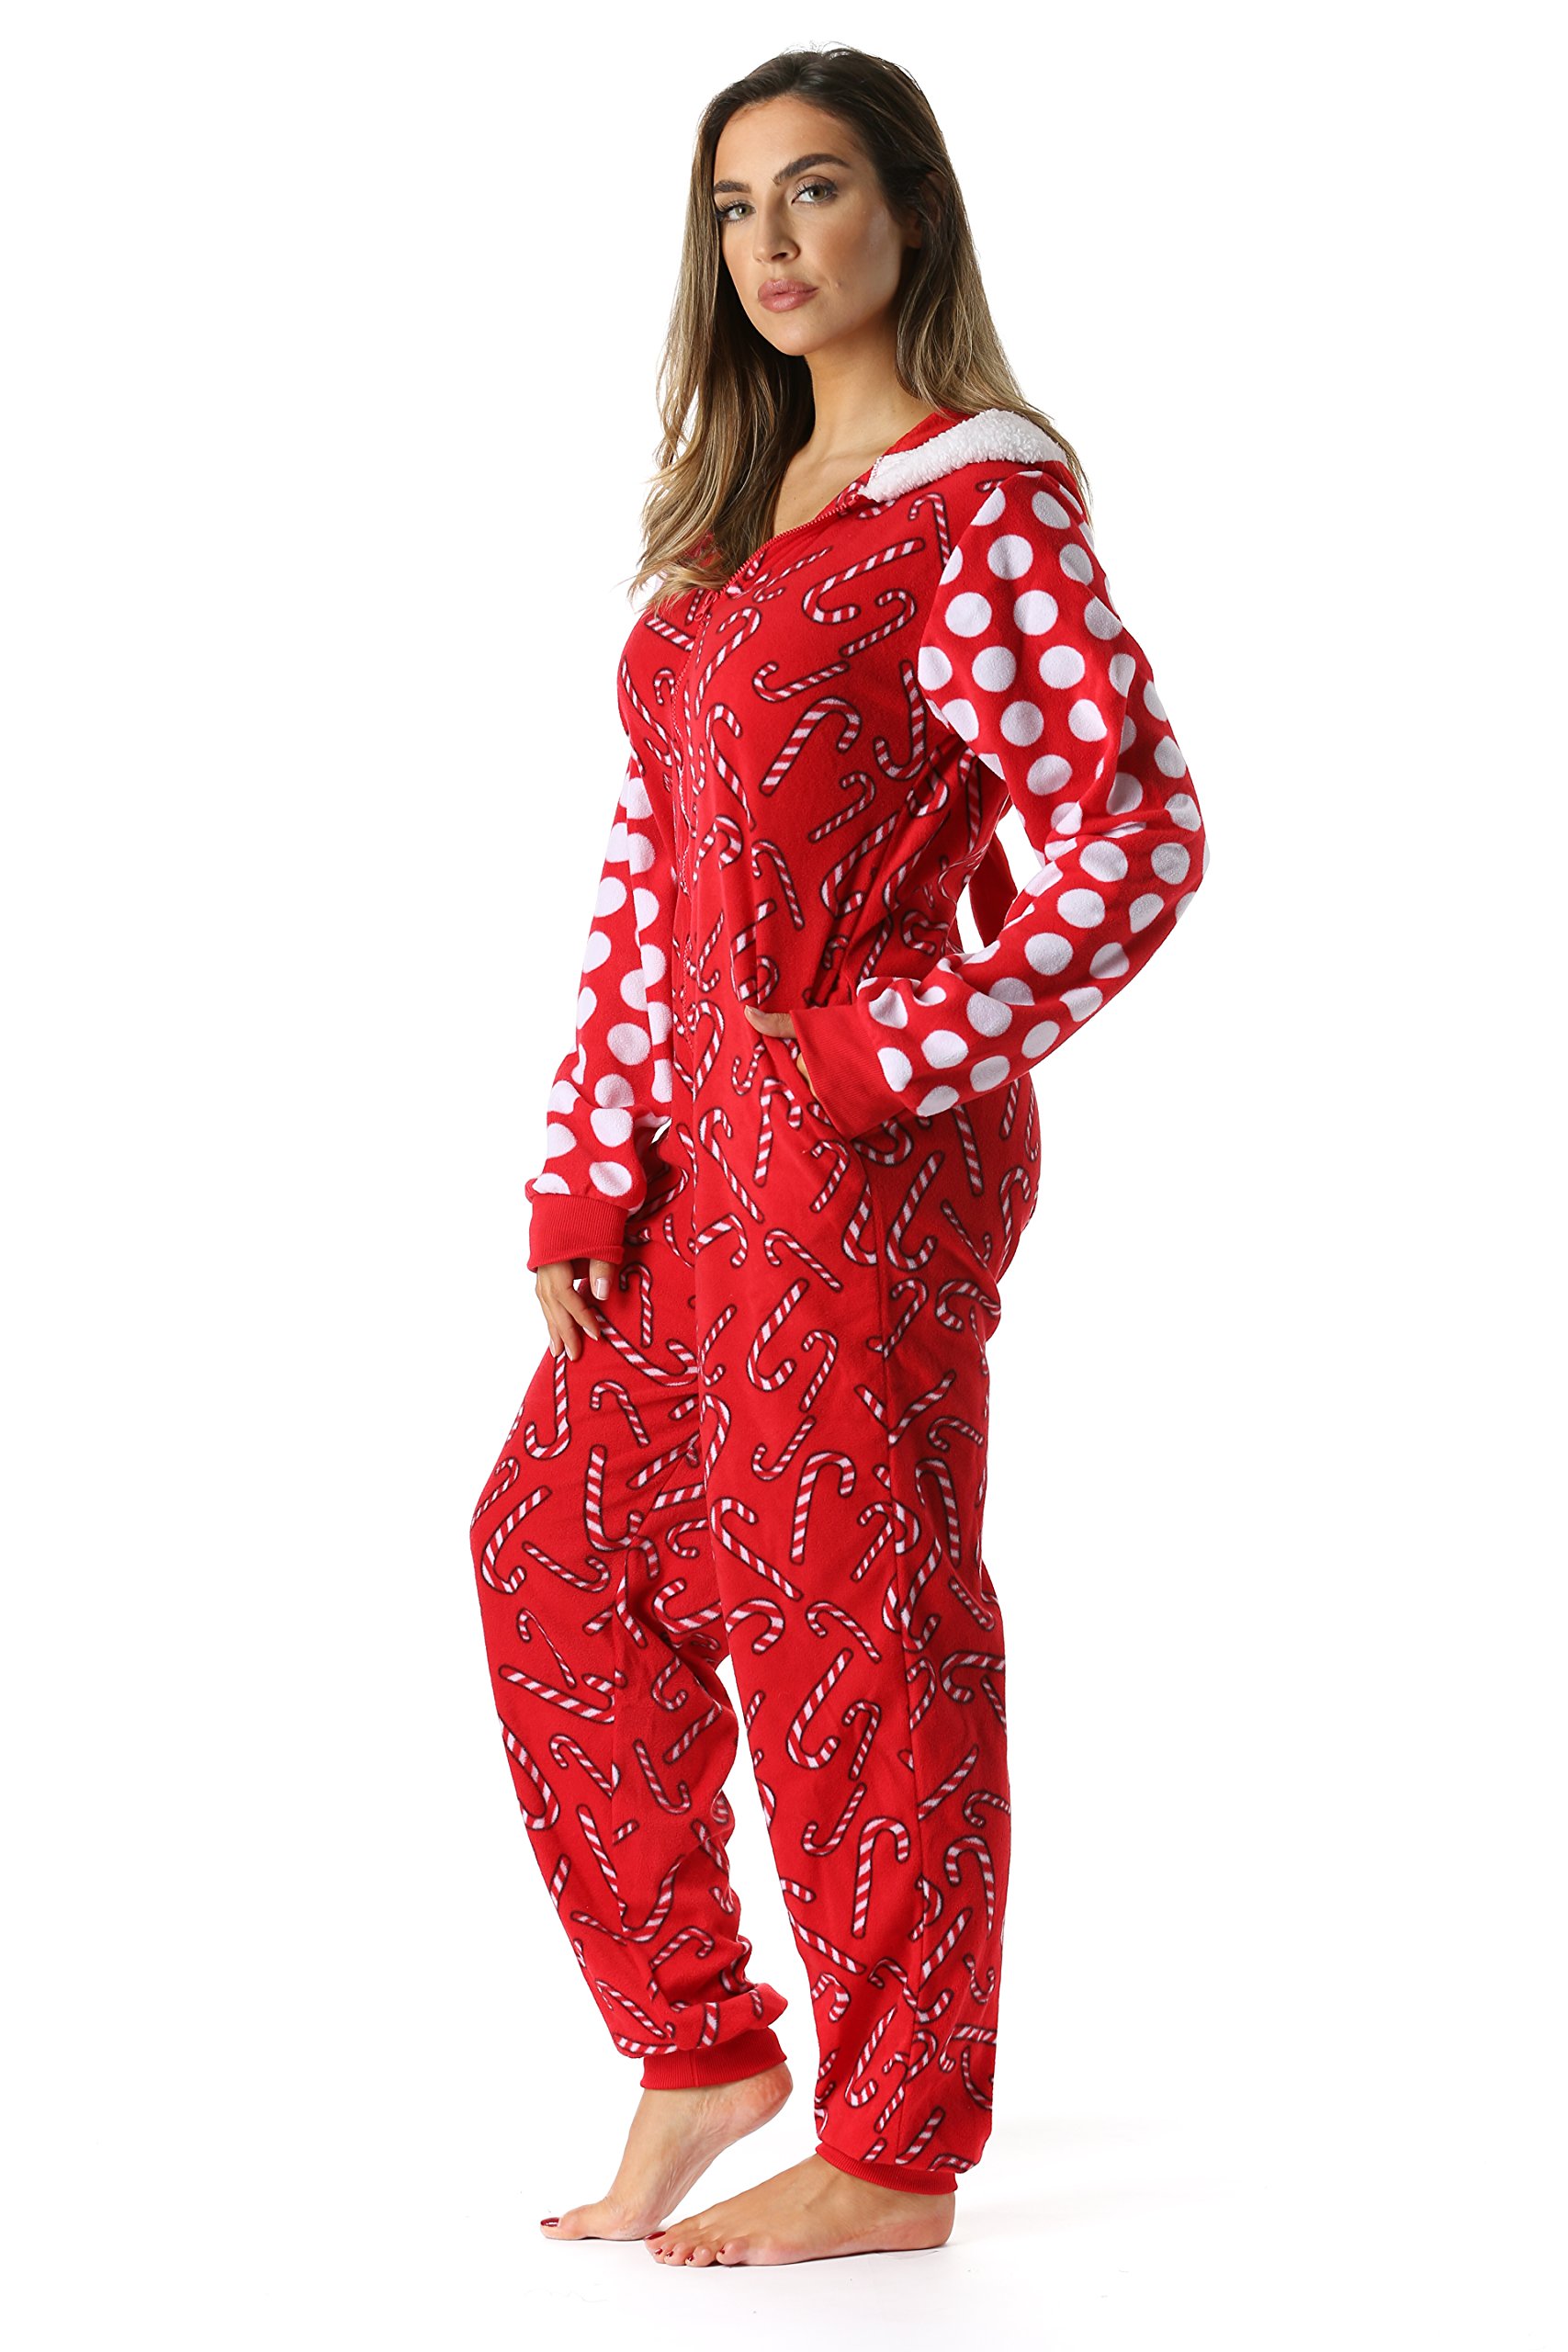 #followme Adult Christmas Onesie for Women Jumpsuit One-Piece Pajamas